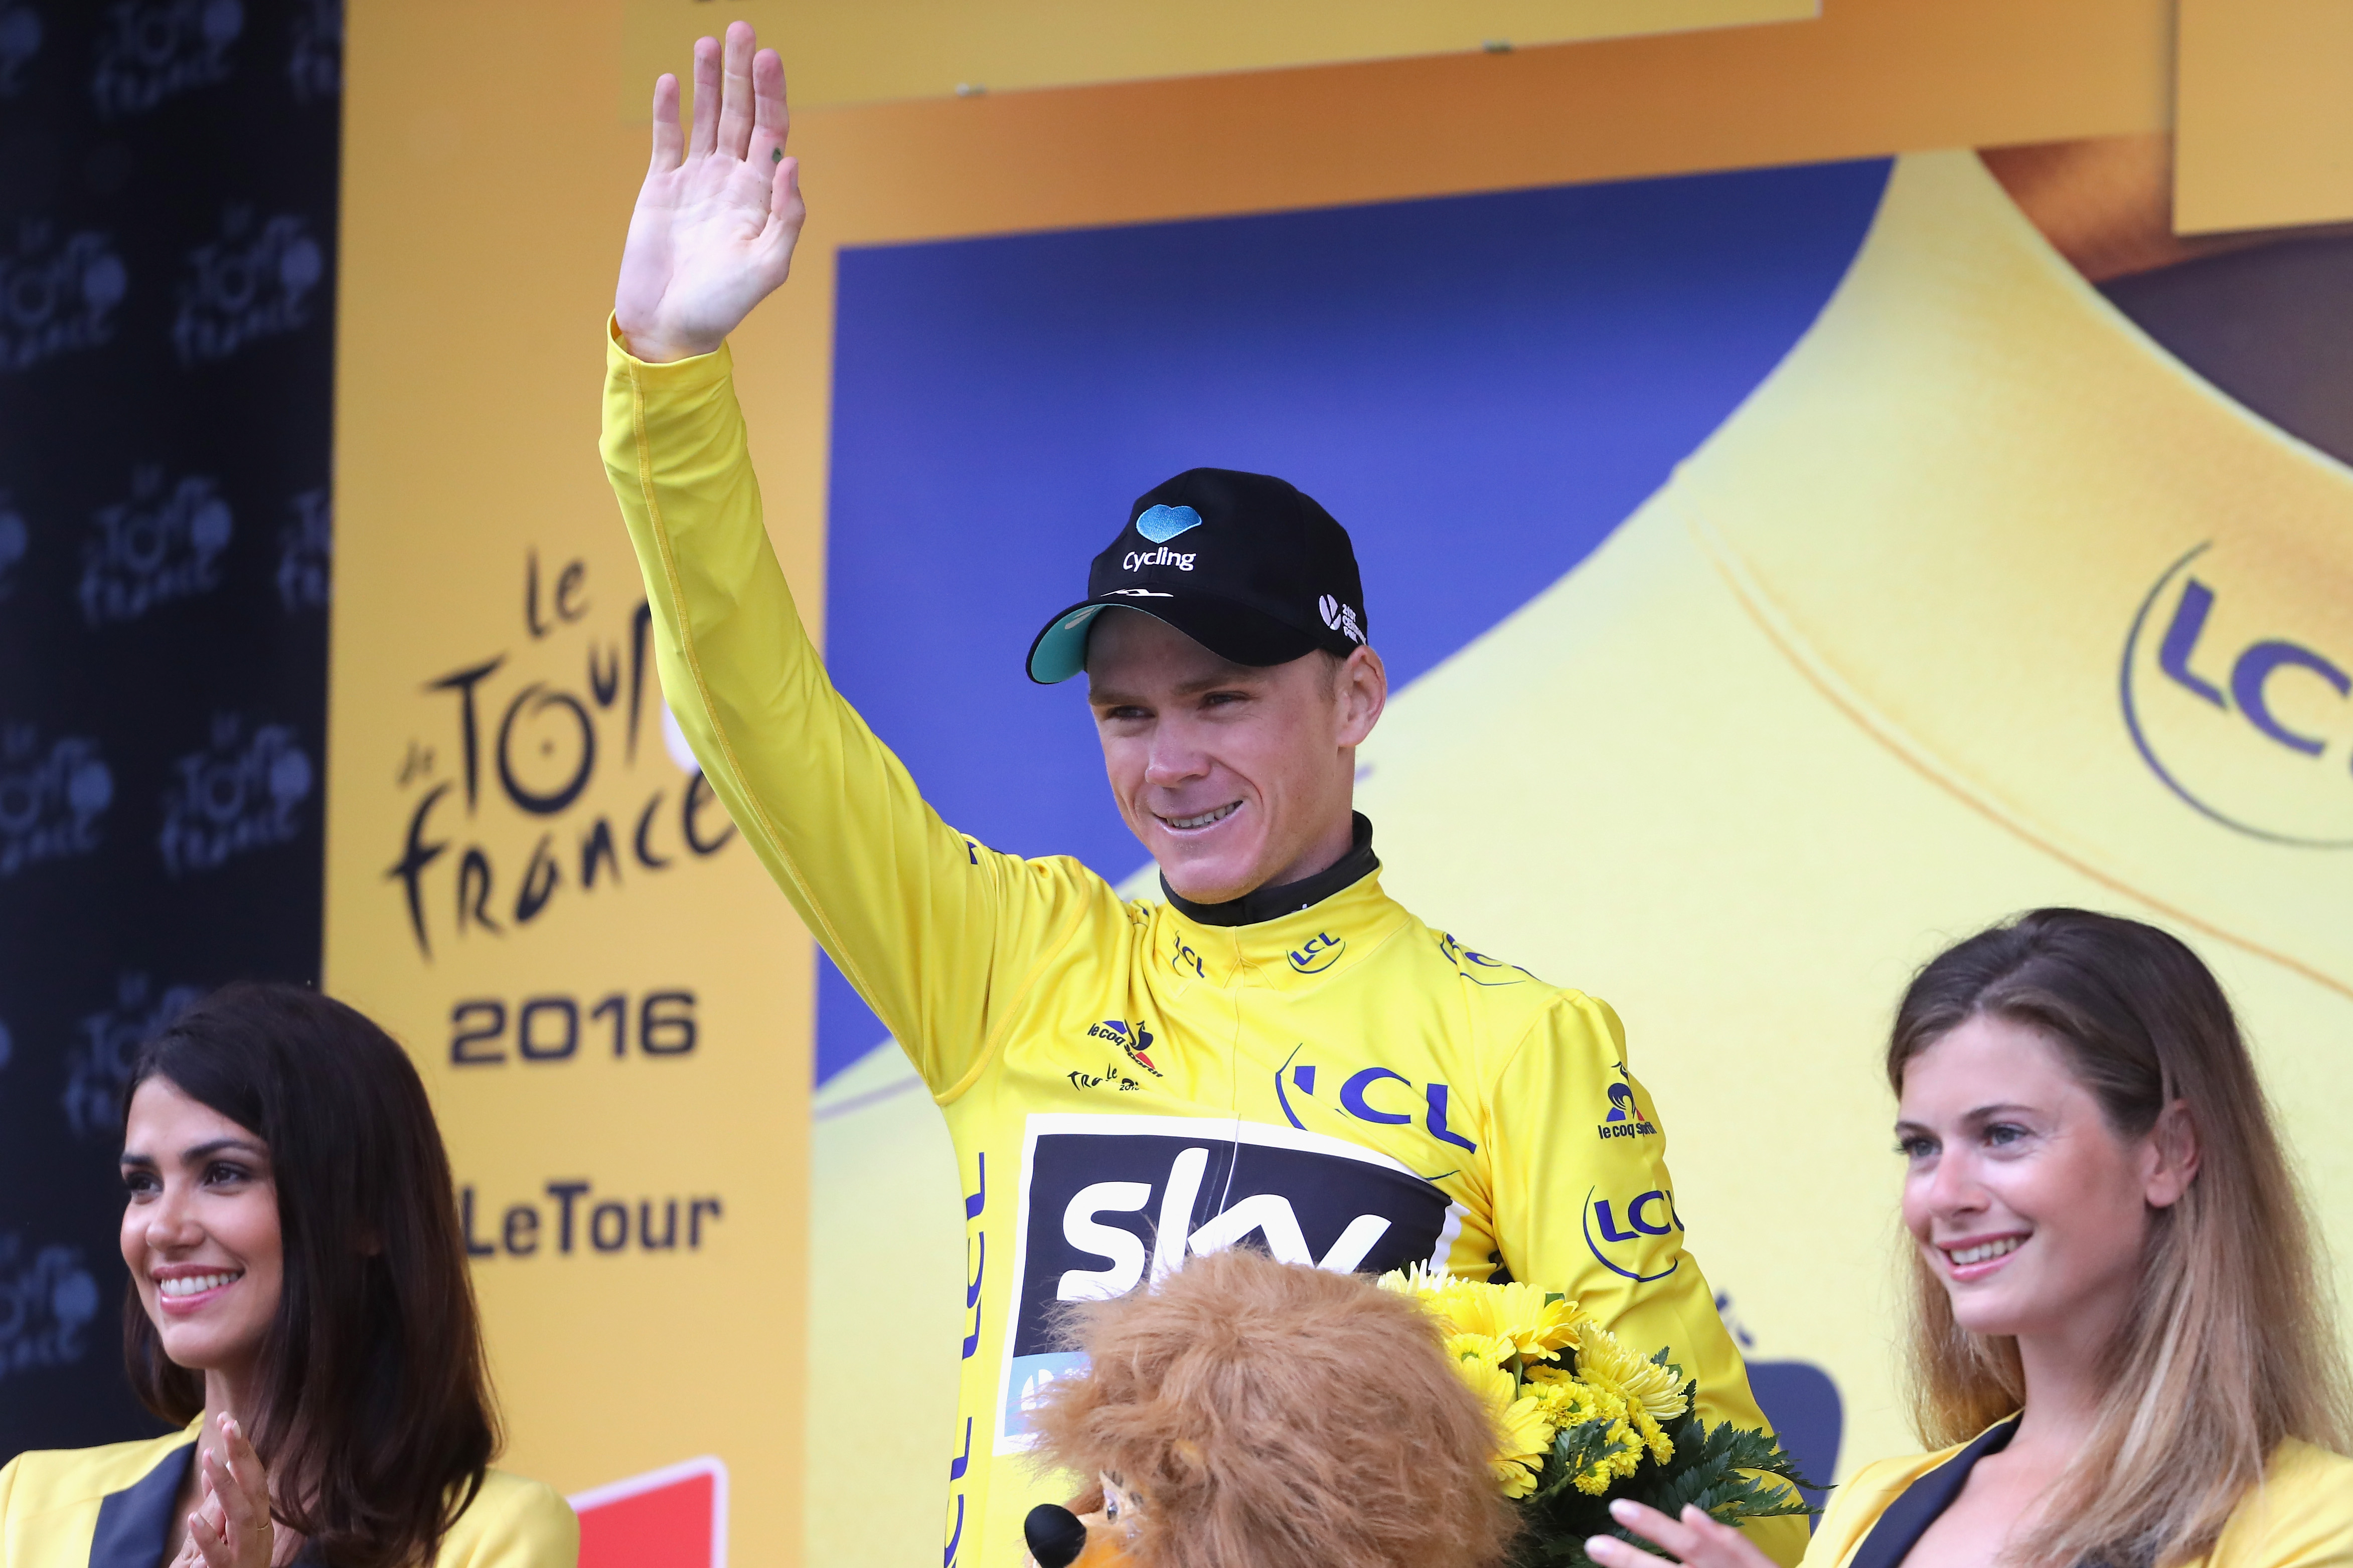 Tour De France Live Stream How to Watch Online